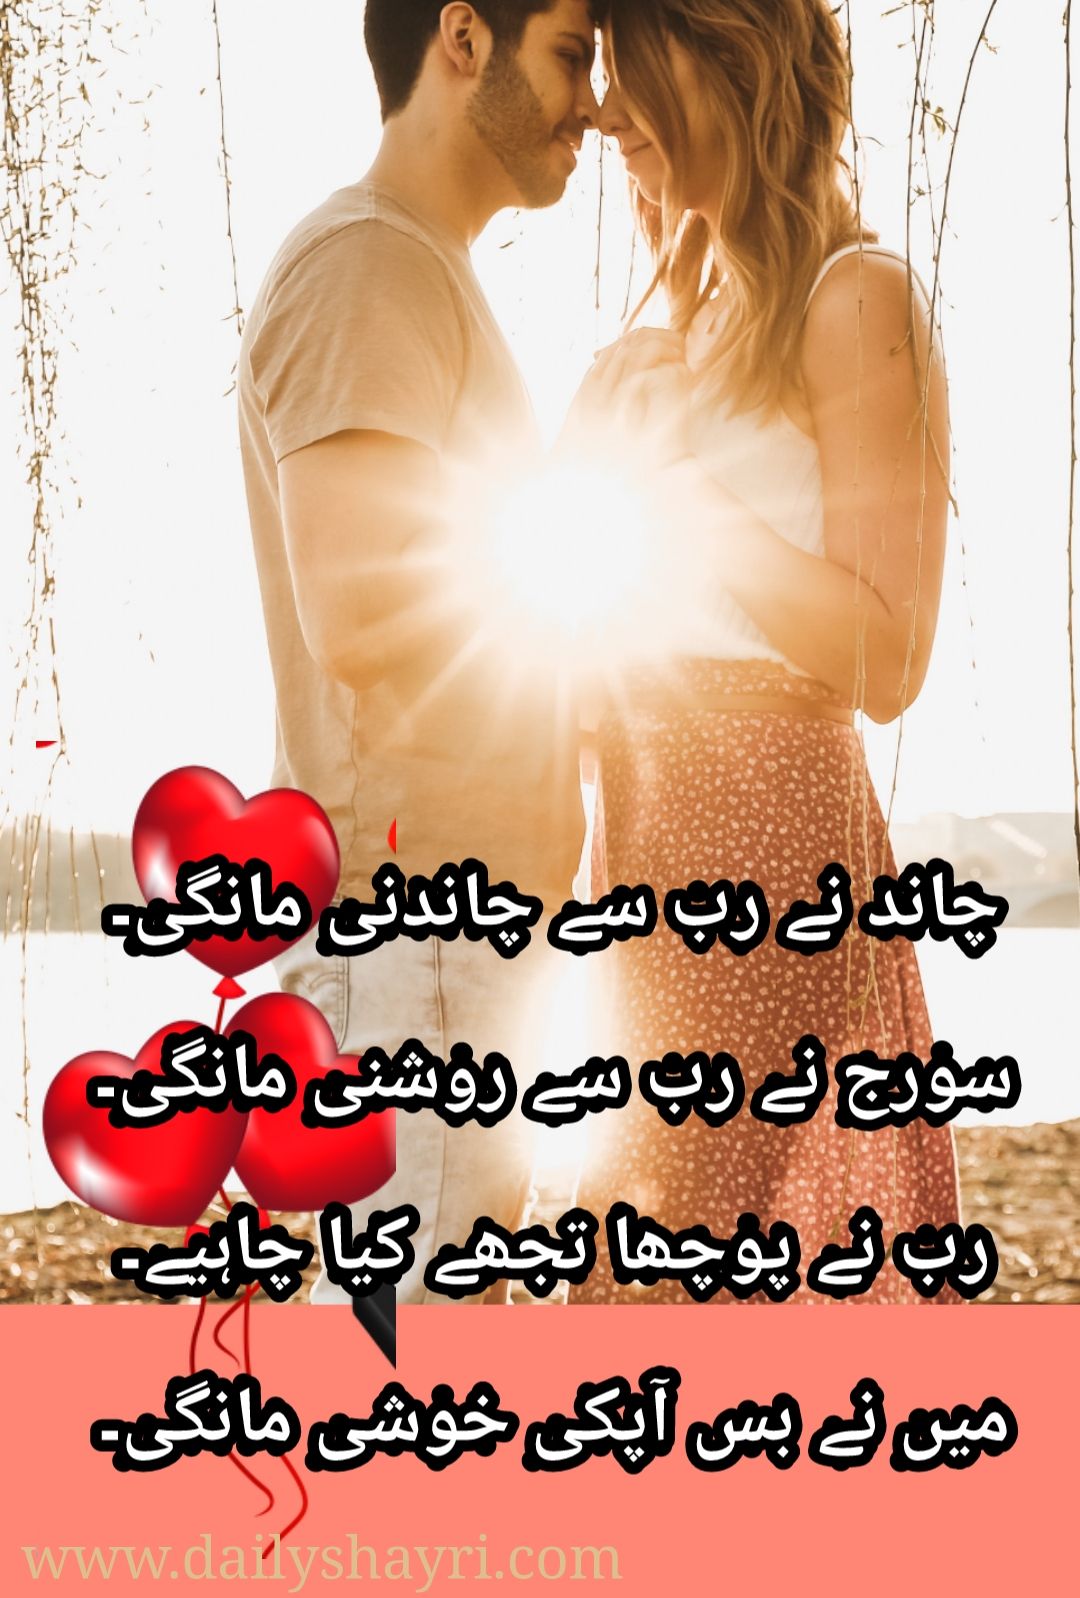 1000 Urdu Love Shayari Images Hd - Hindi Shayari Love Shayari Love Quotes Hd Images